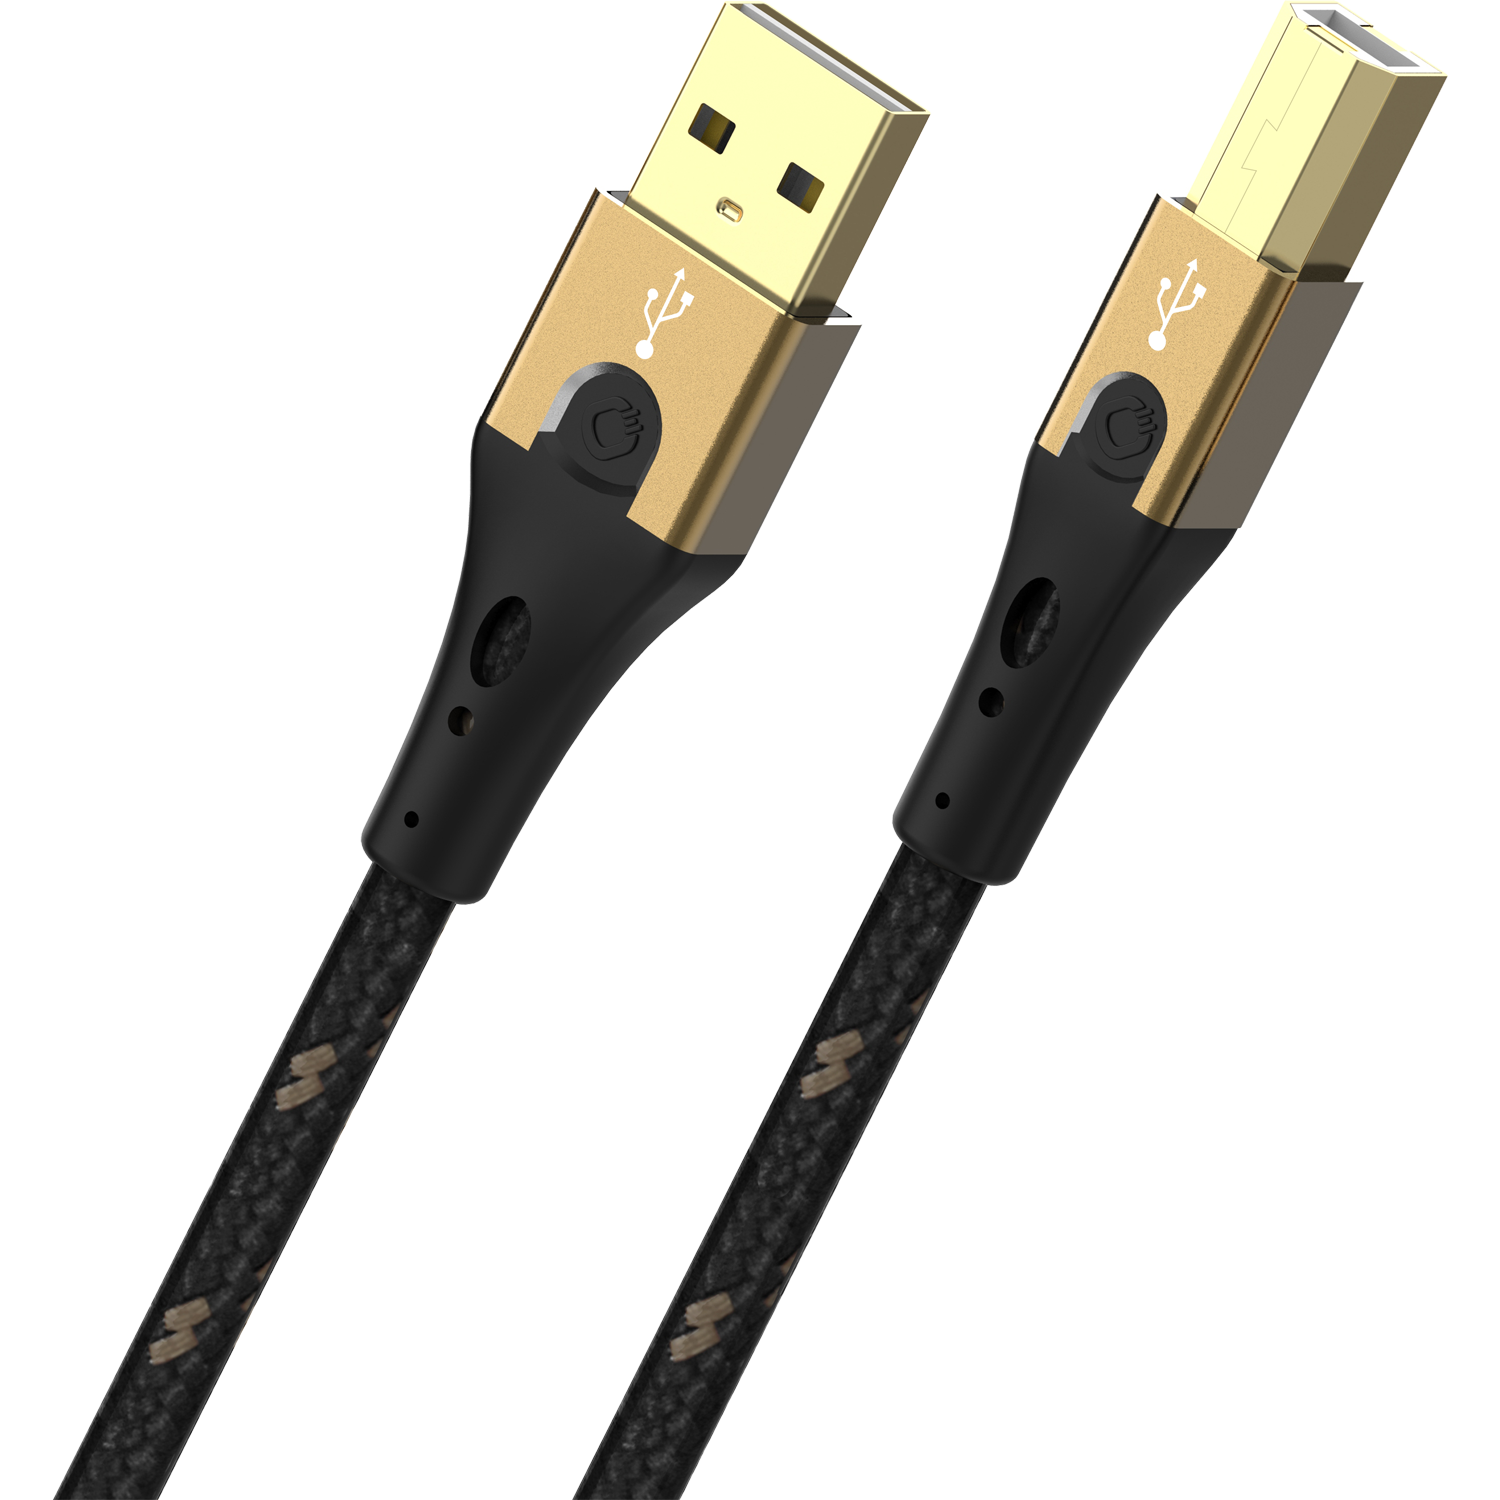 OEHLBACH Primus USB-Kabel Kabel B 2.0 auf Typ A Typ B